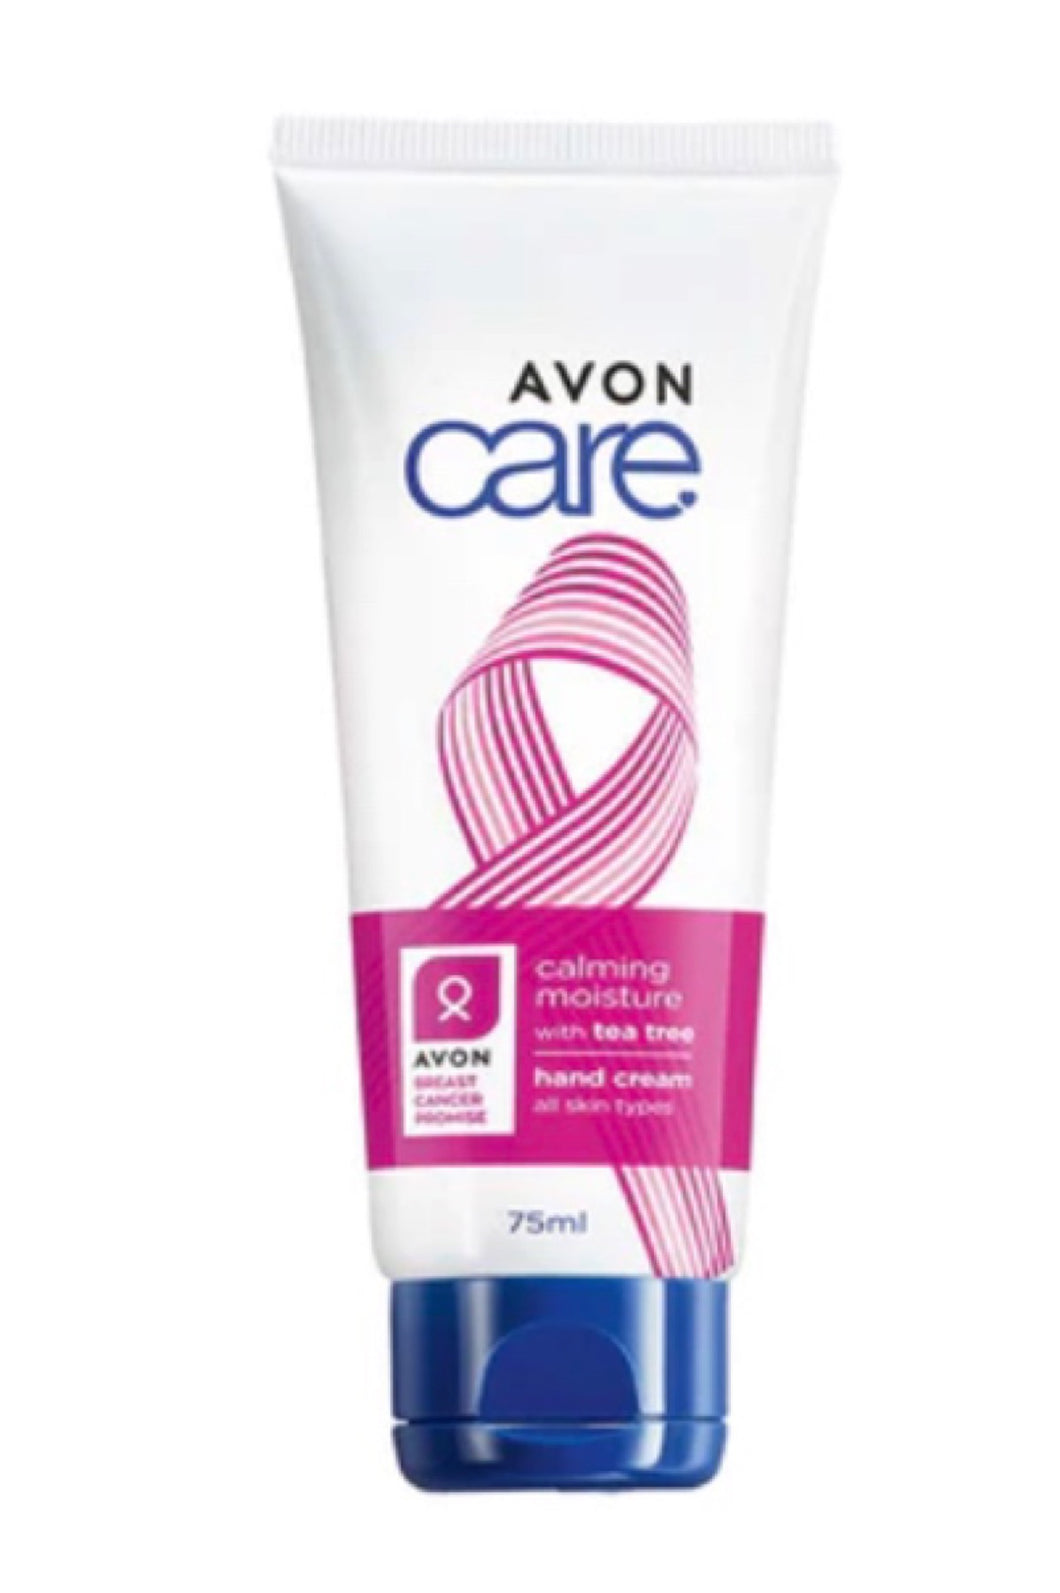 Avon Care Breast Cancer Calming Moisture with Tea Tree Hand Cream 75ml